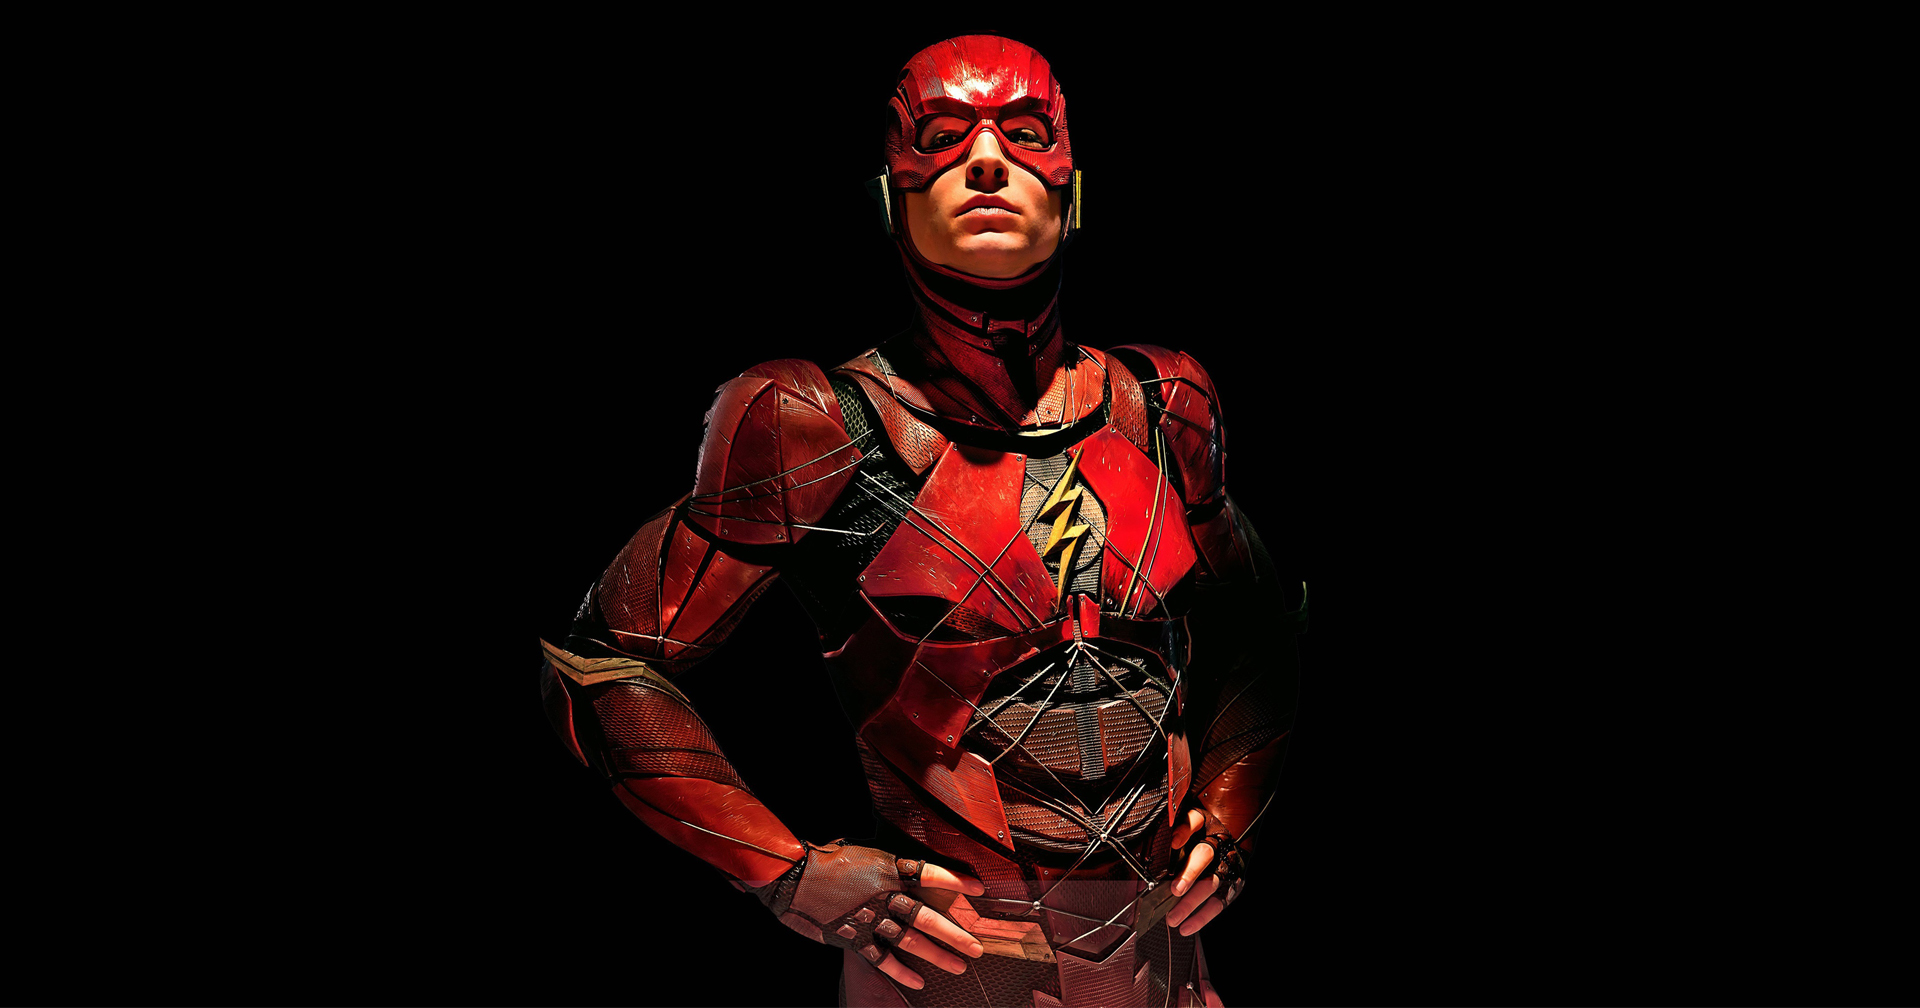 ‘Ezra Miller’ โดนปลดจากจักรวาล DC ในอนาคตแล้ว (แต่ยังไม่ยืนยันว่าจะปลดจากหนัง ‘The Flash’ ด้วยหรือไม่)